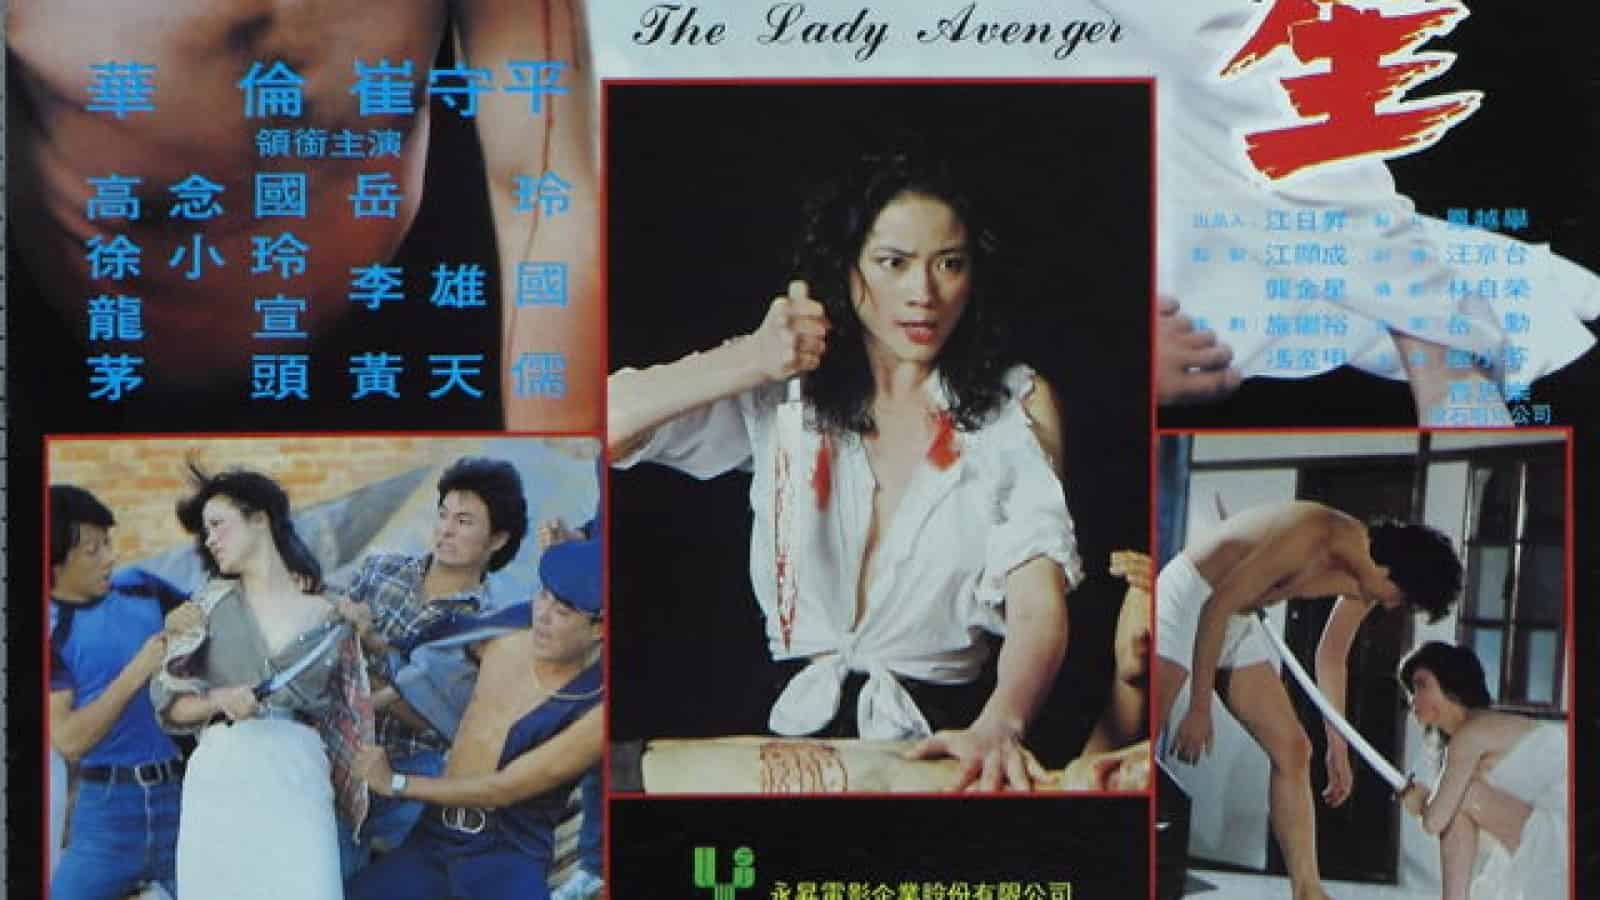 The Lady Avenger (1981) by Yang Chia-yun